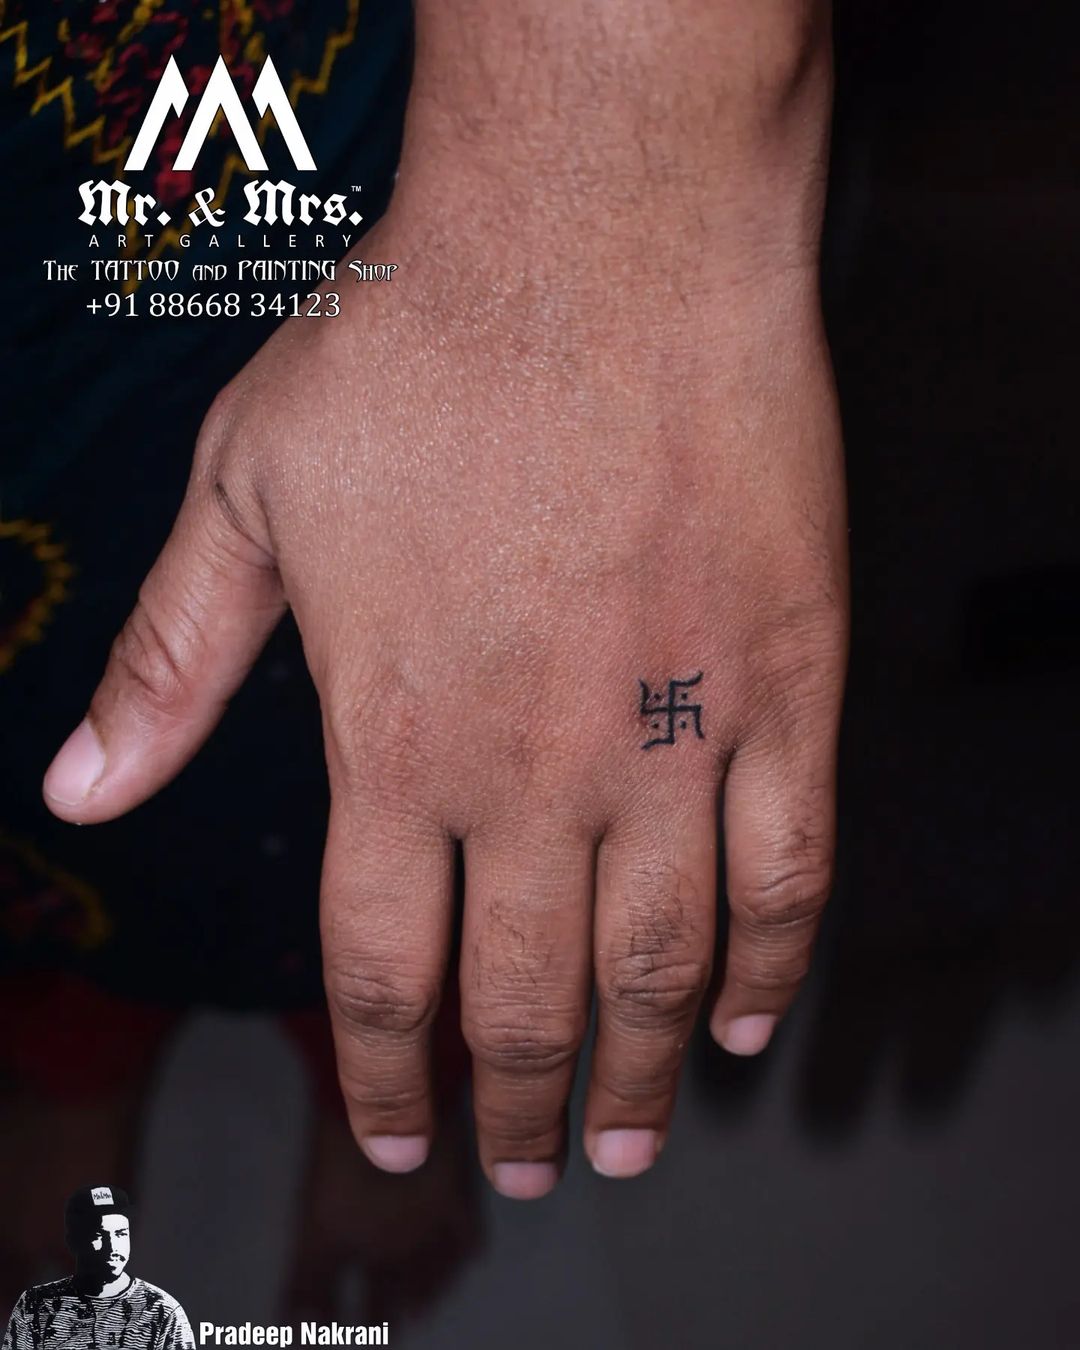 30 Finger Tattoos that are Creative & Beautiful • Tattoodo